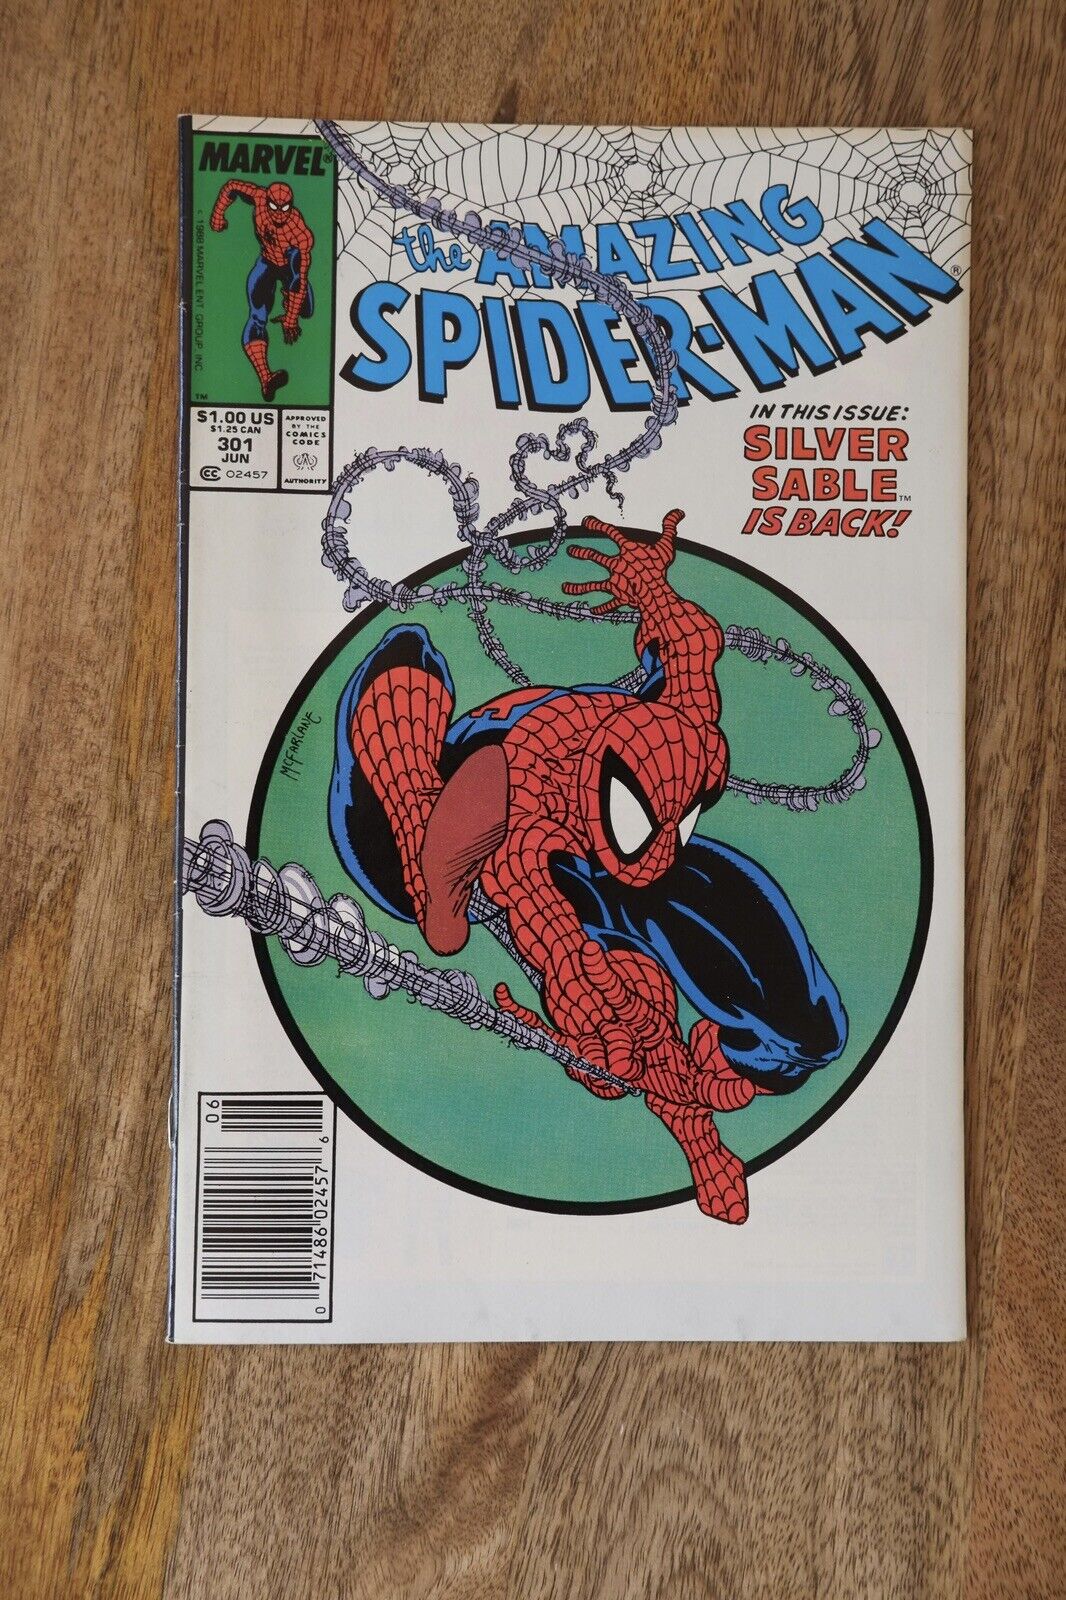 The Amazing Spider-Man, Vol. 1 #301 | McFarlane | Marvel | 1988